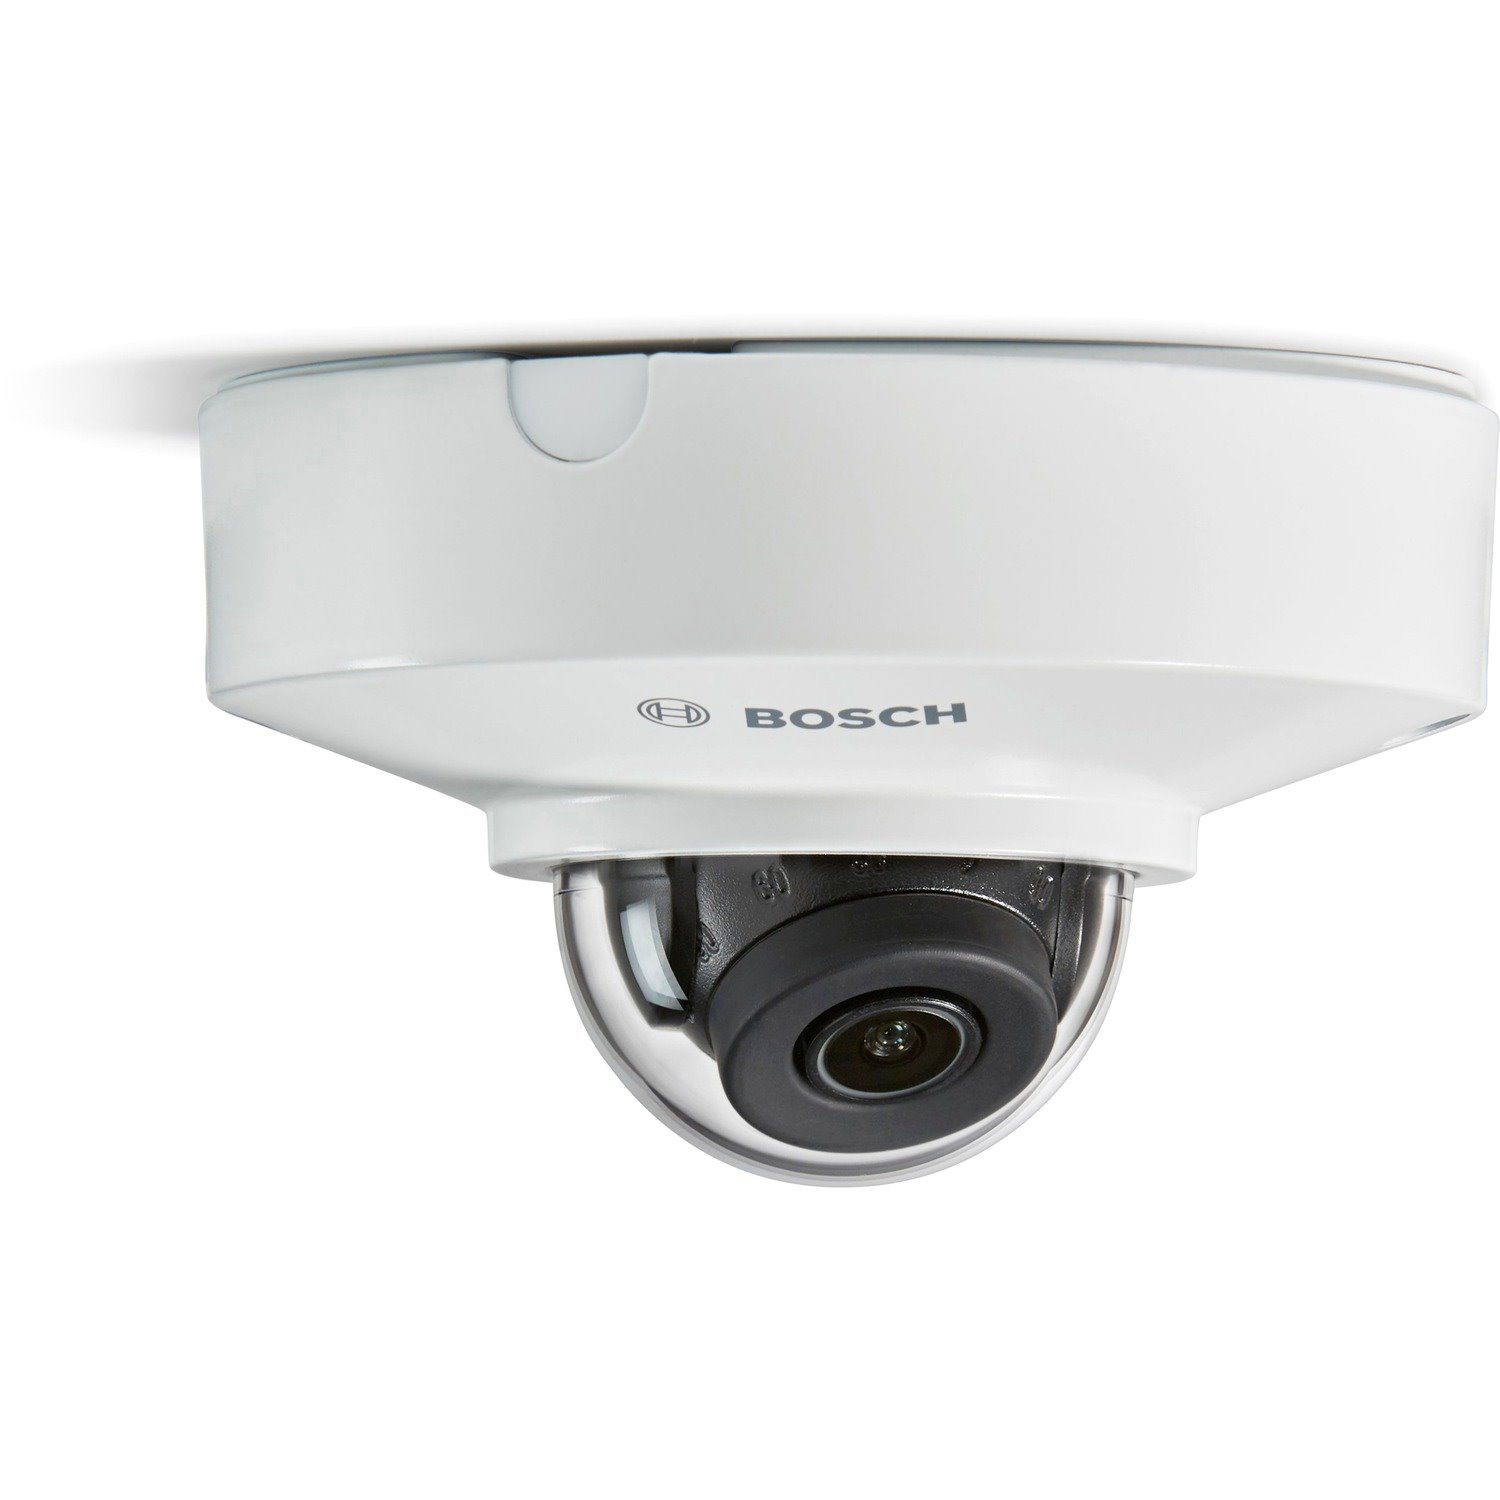 Bosch FLEXIDOME IP 5 Megapixel Indoor Network Camera - Colour - Micro Dome - White - TAA Compliant